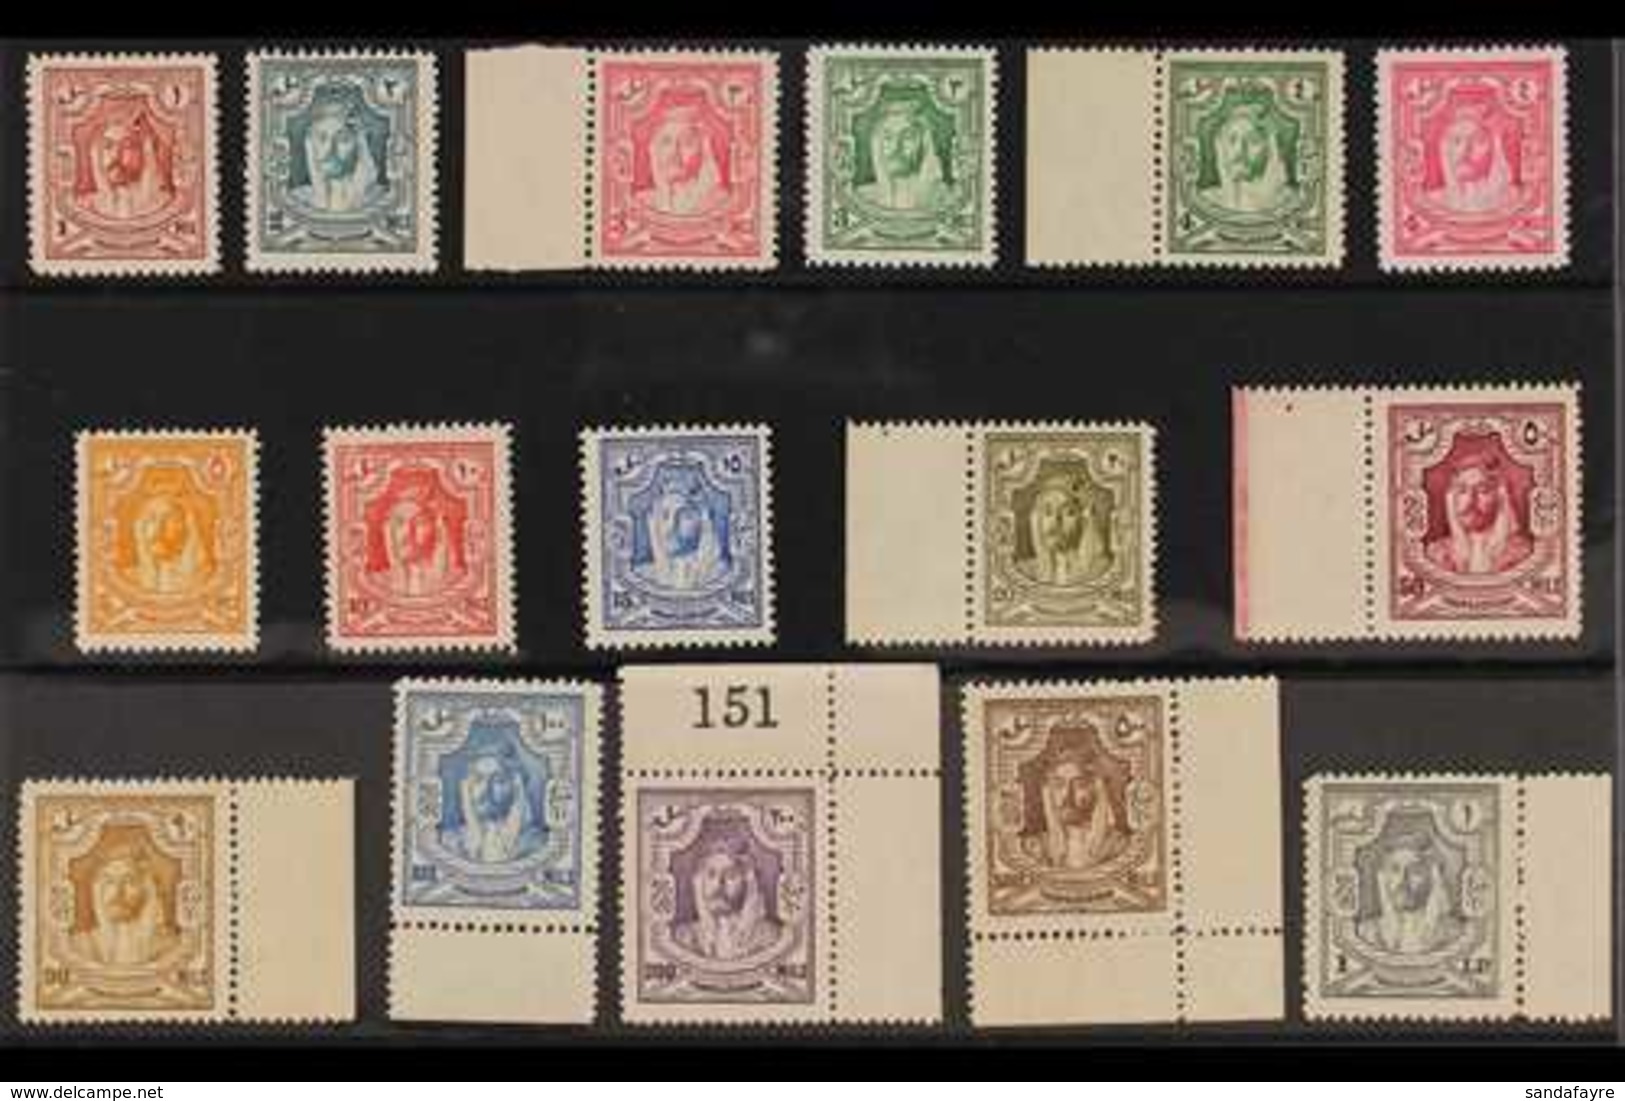 1930-34 (perf 14) Definitives Complete Set, SG 194b/207, Never Hinged Mint. (16 Stamps) For More Images, Please Visit Ht - Jordanie